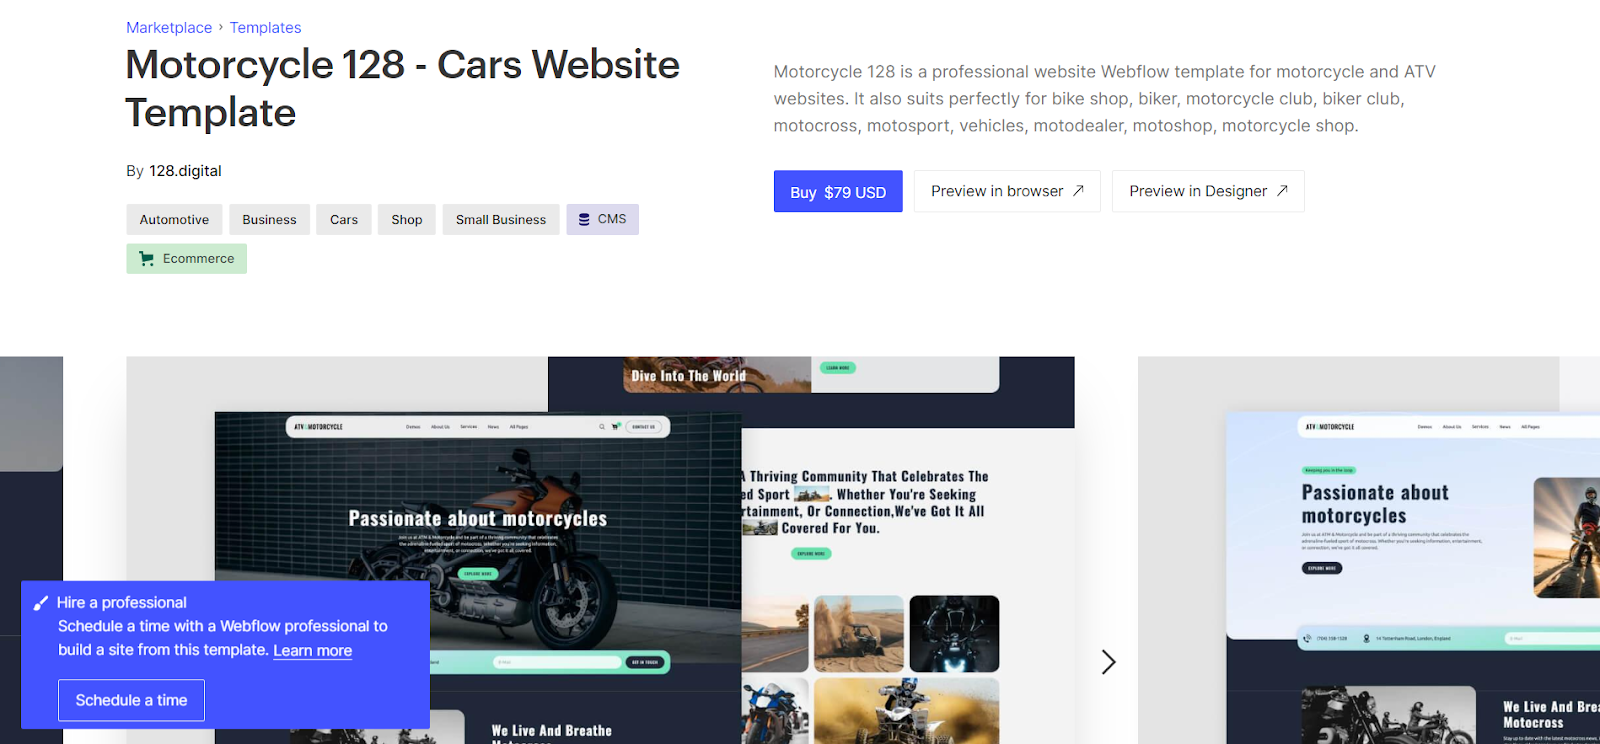 Motorcycle 128 - Cars Website Template